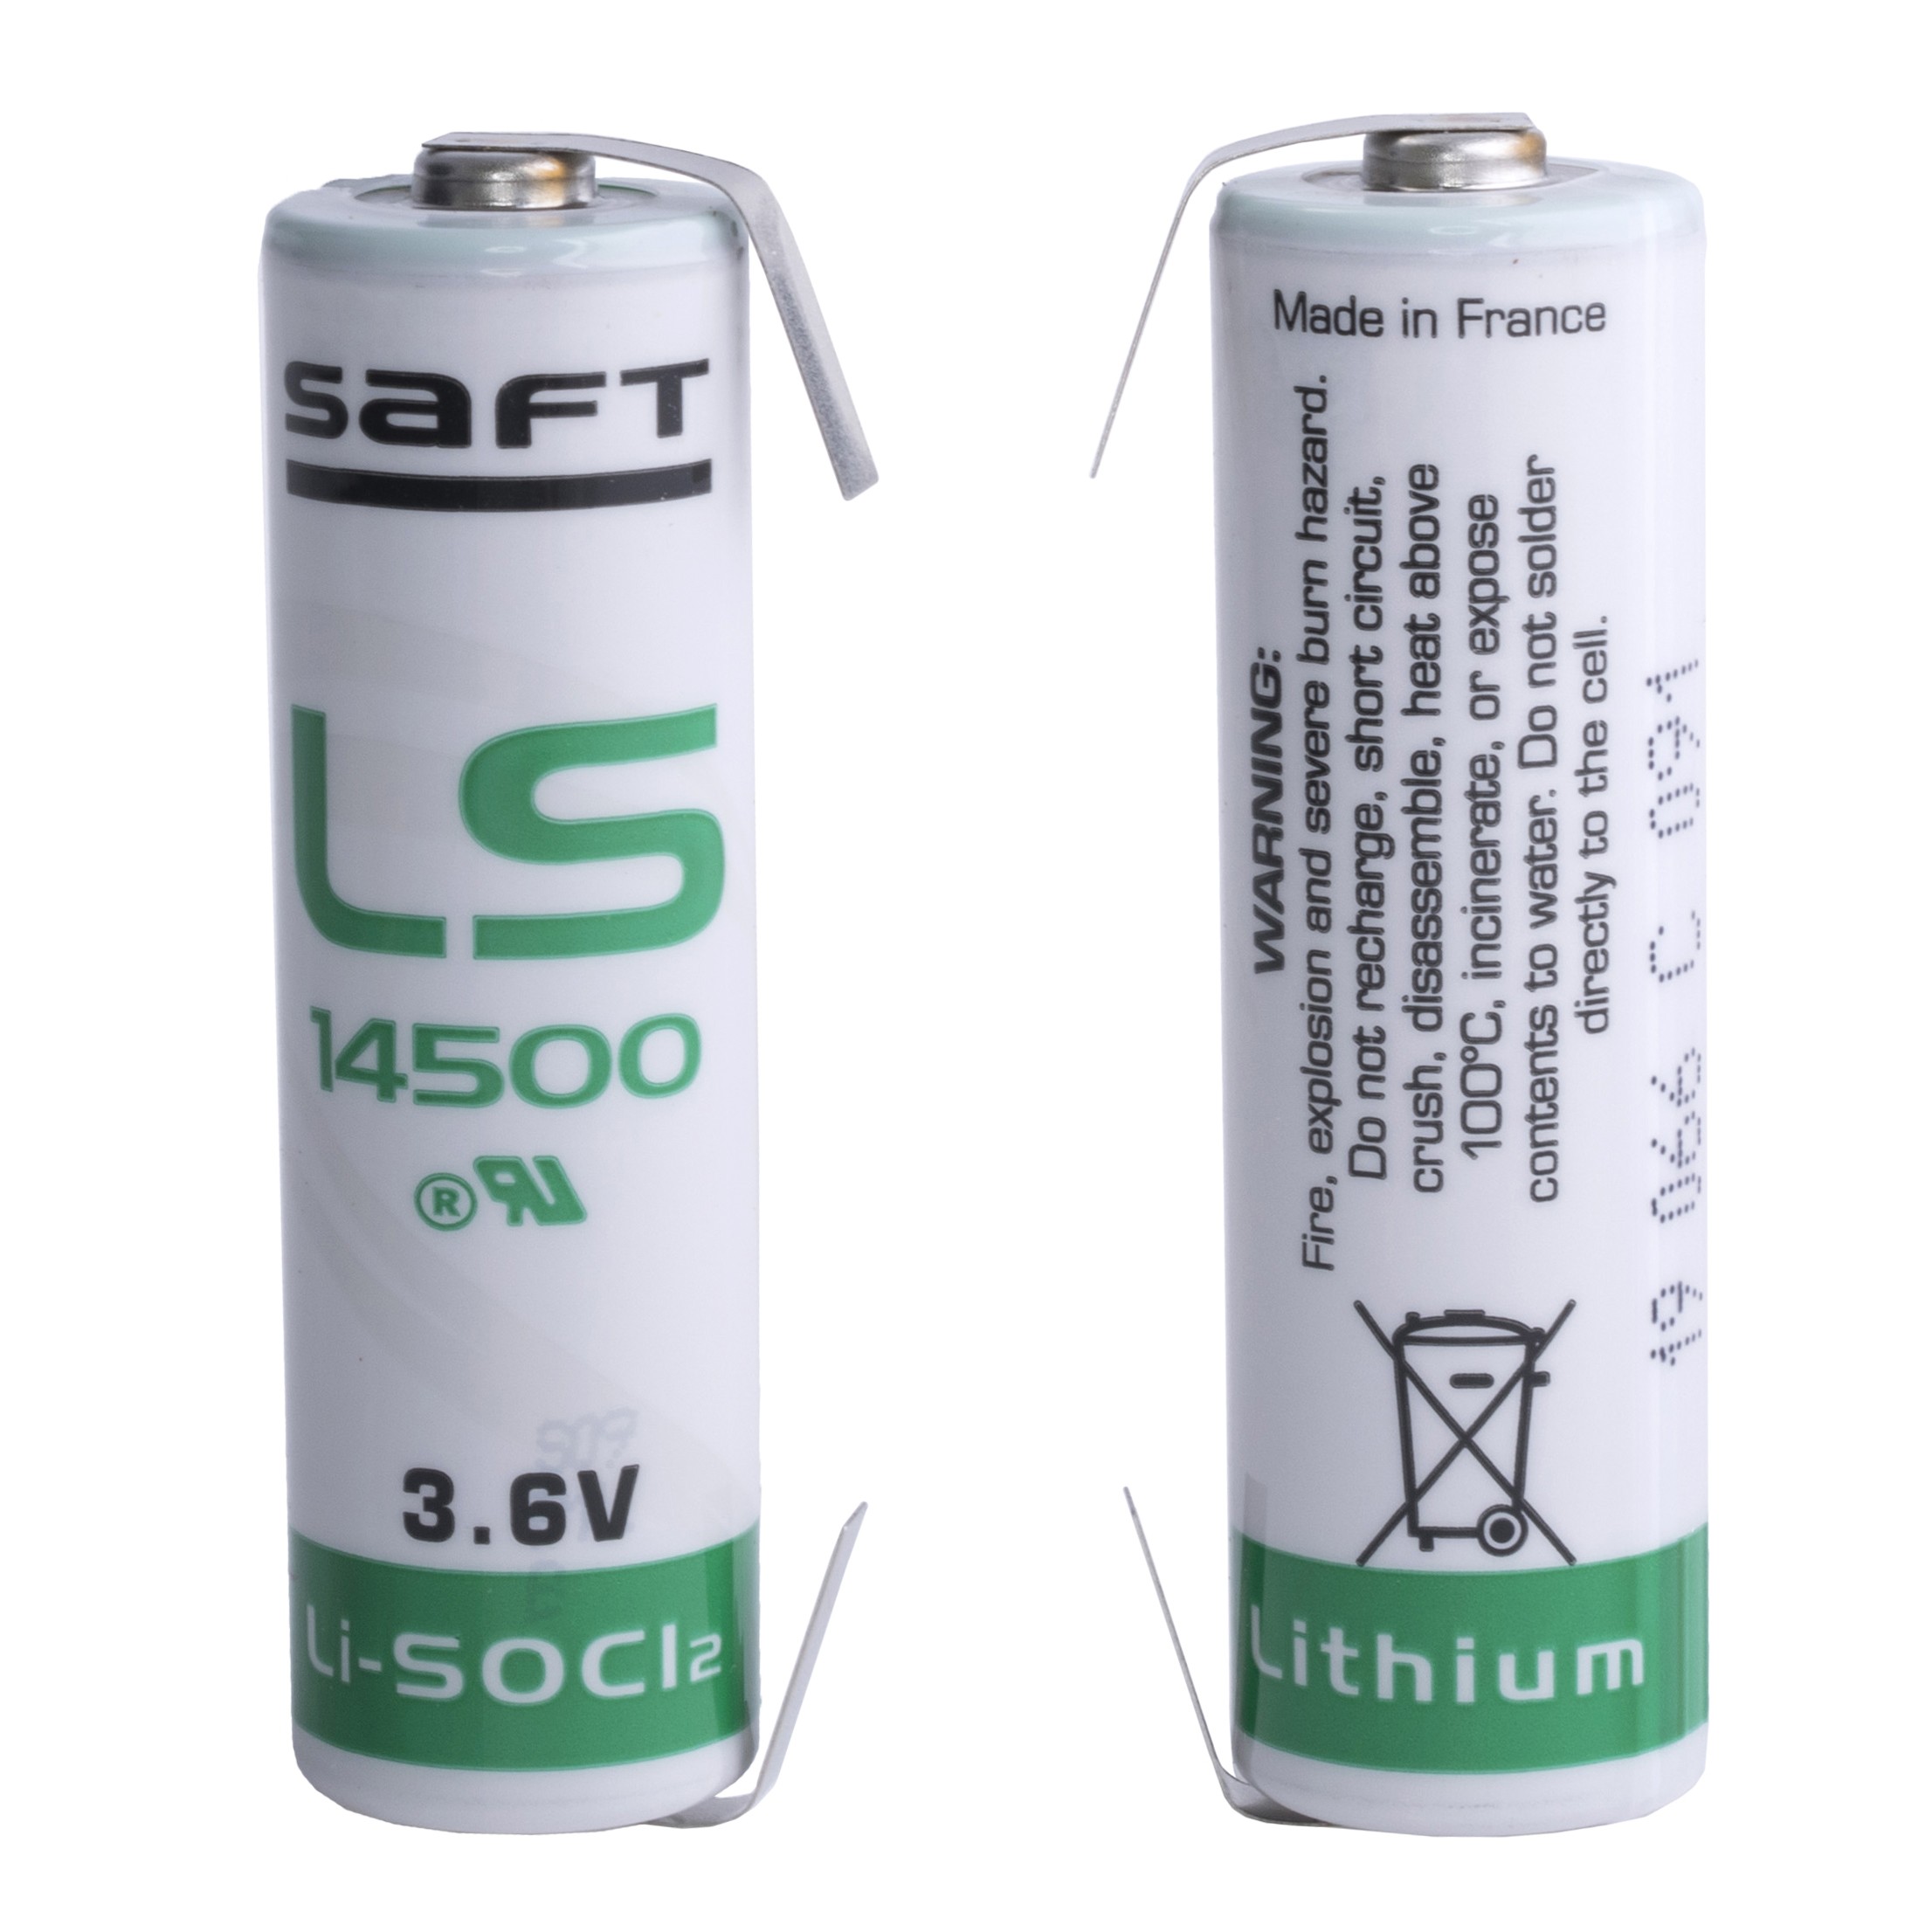 SAFT Lithium Batterie AA LS 14500 CNR mit Lotfahnen U-Formig 3,6V 2,6Ah  Lithium-Thionylchlorid